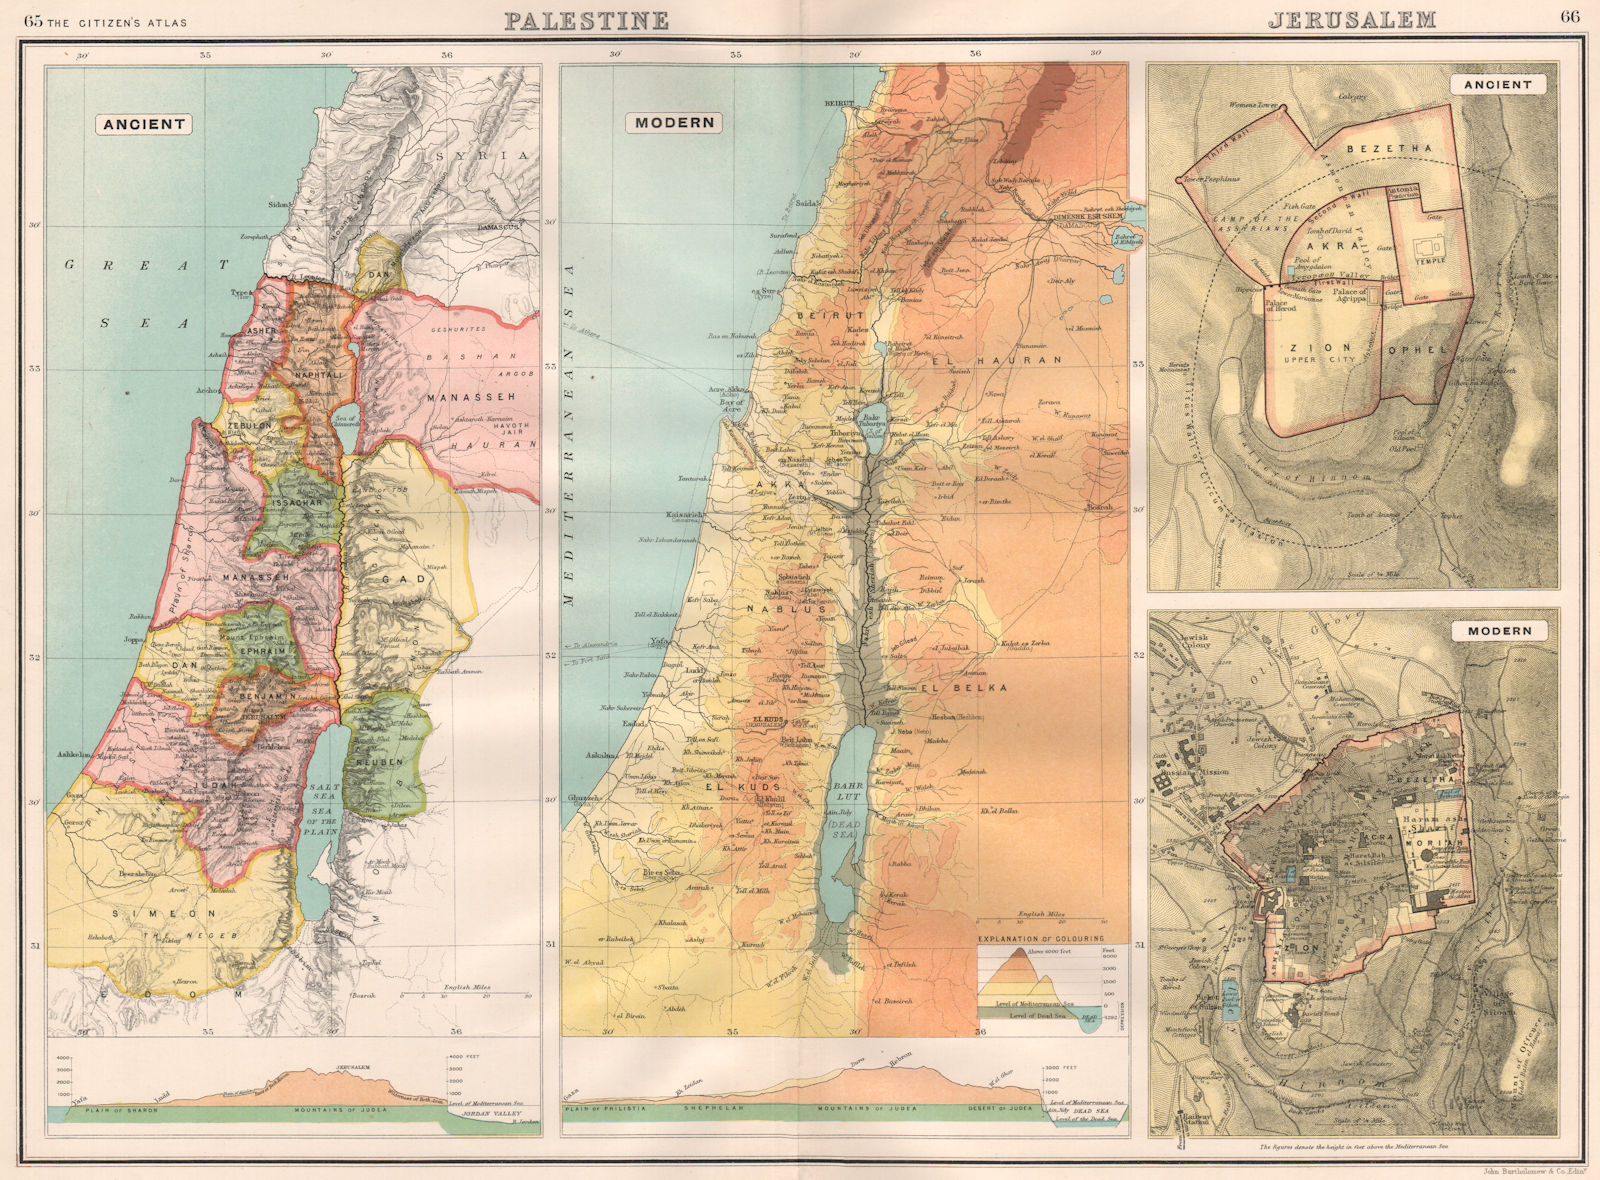 12 TRIBES OF ISRAEL. Palestine/Jerusalem Ancient & Modern. BARTHOLOMEW 1898 map